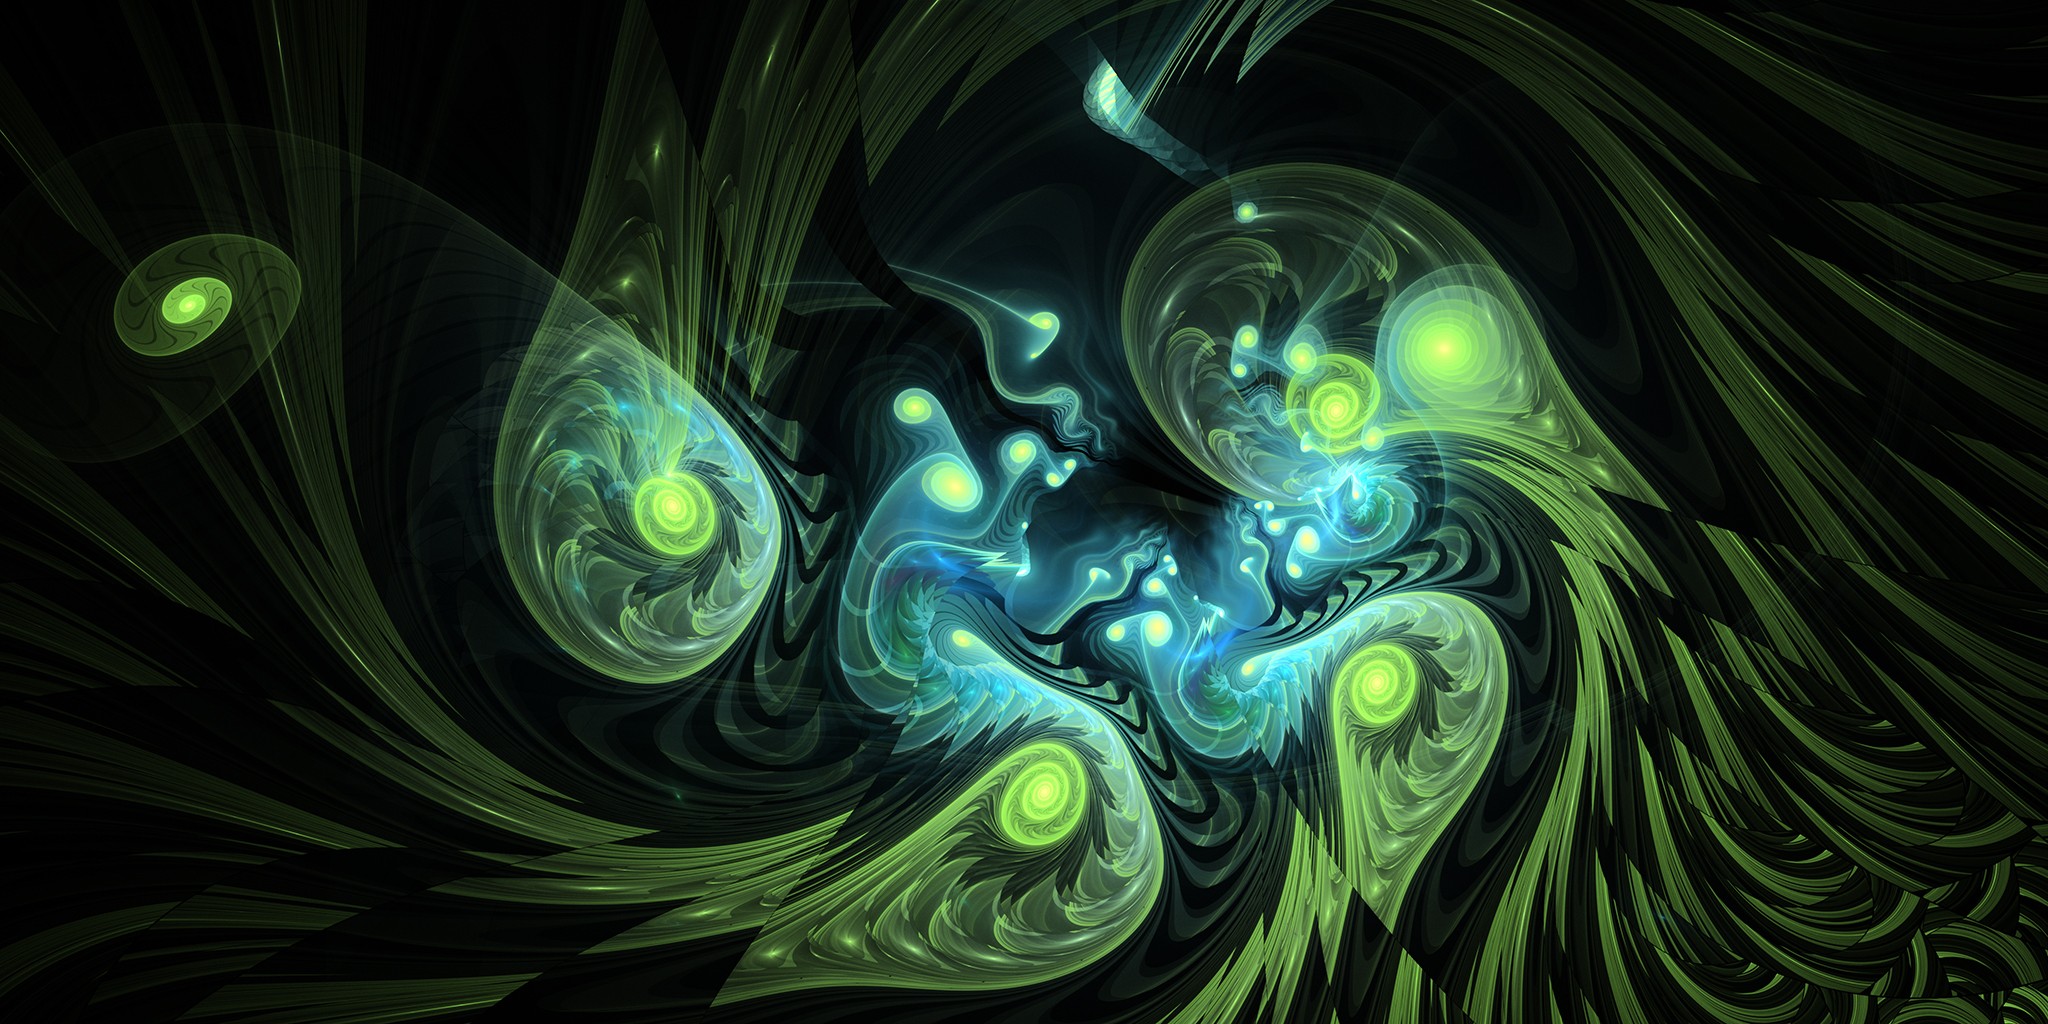 General 2048x1024 fractal Apophysis digital art CGI waves abstract DeviantArt shapes swirls green